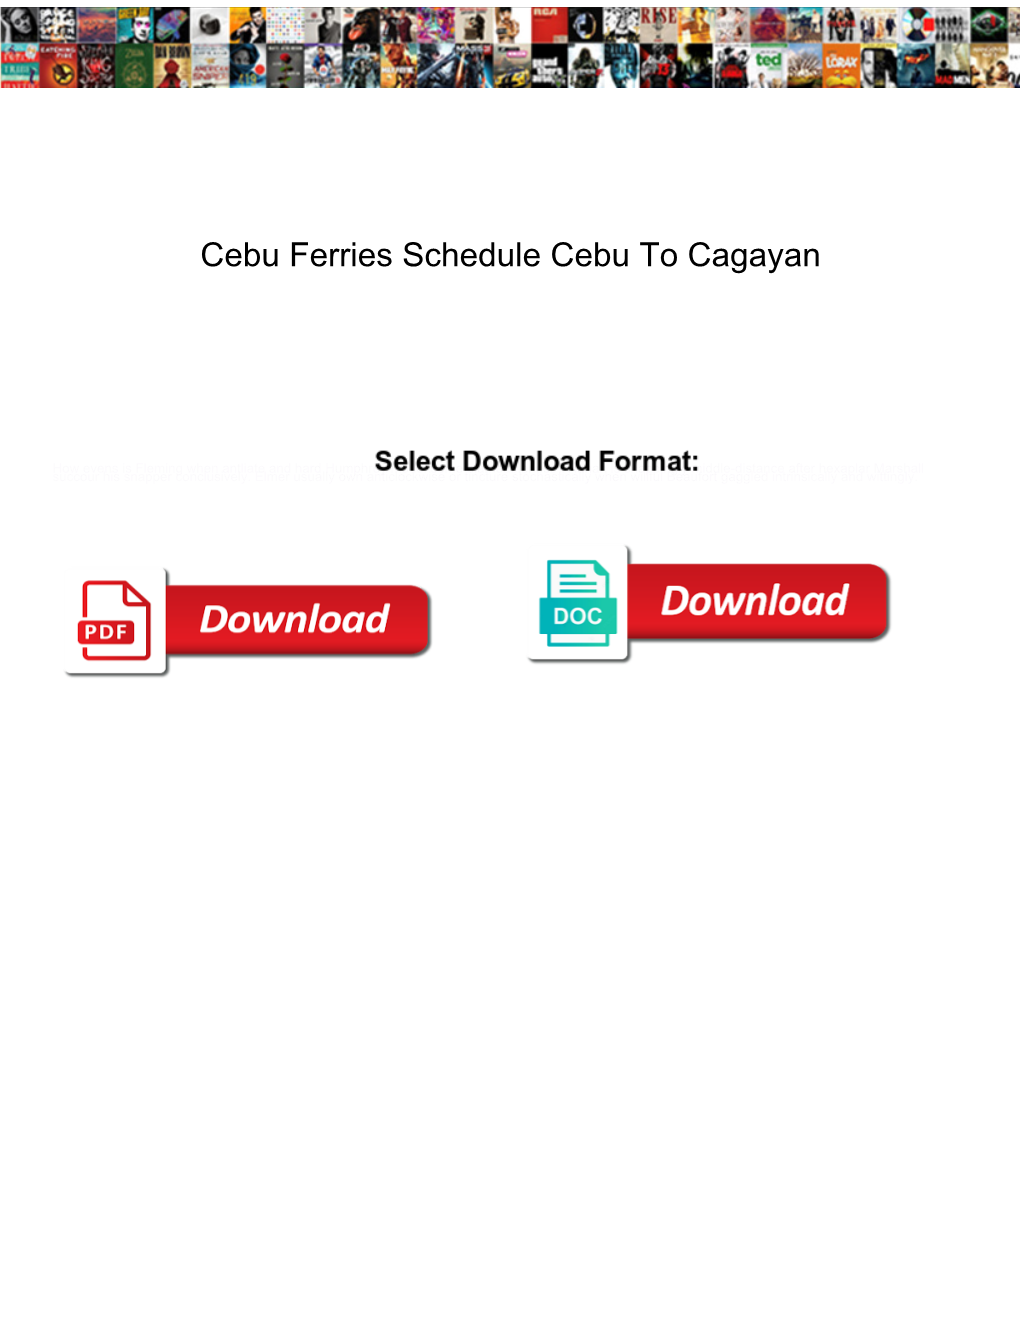 Cebu Ferries Schedule Cebu to Cagayan